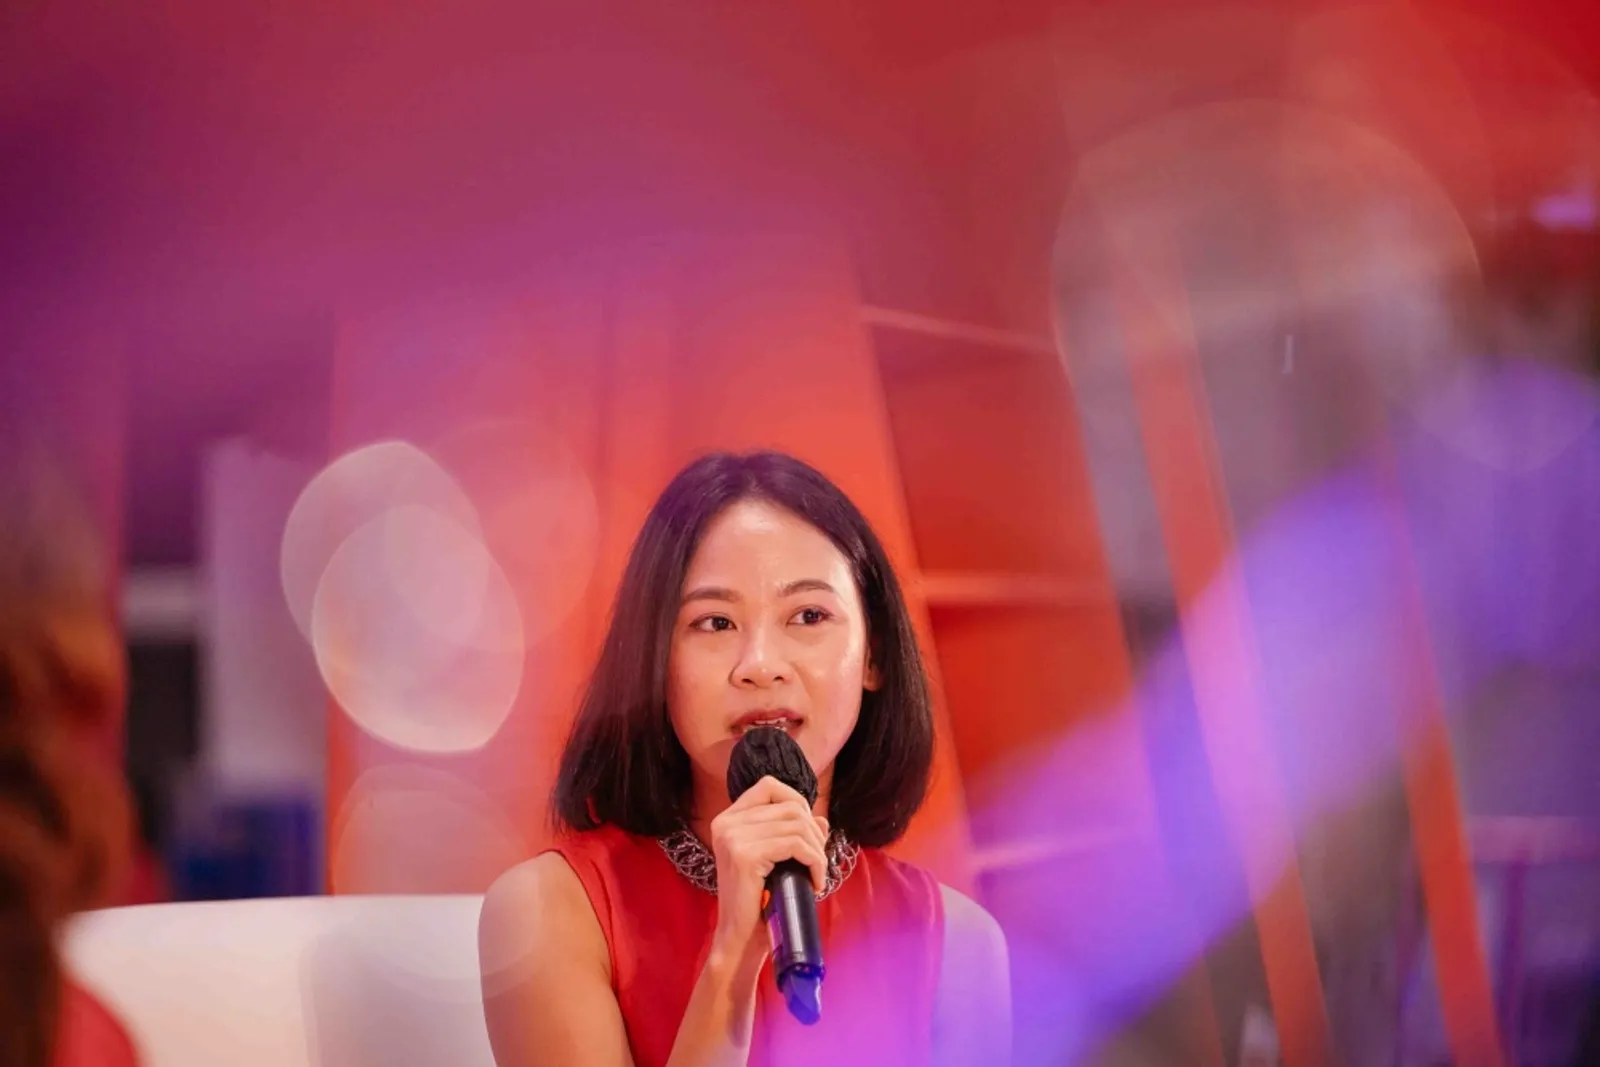 Judithya Pitana: "BFA Surabaya 2023 Jadi Perayaan Dunia Kecantikan"